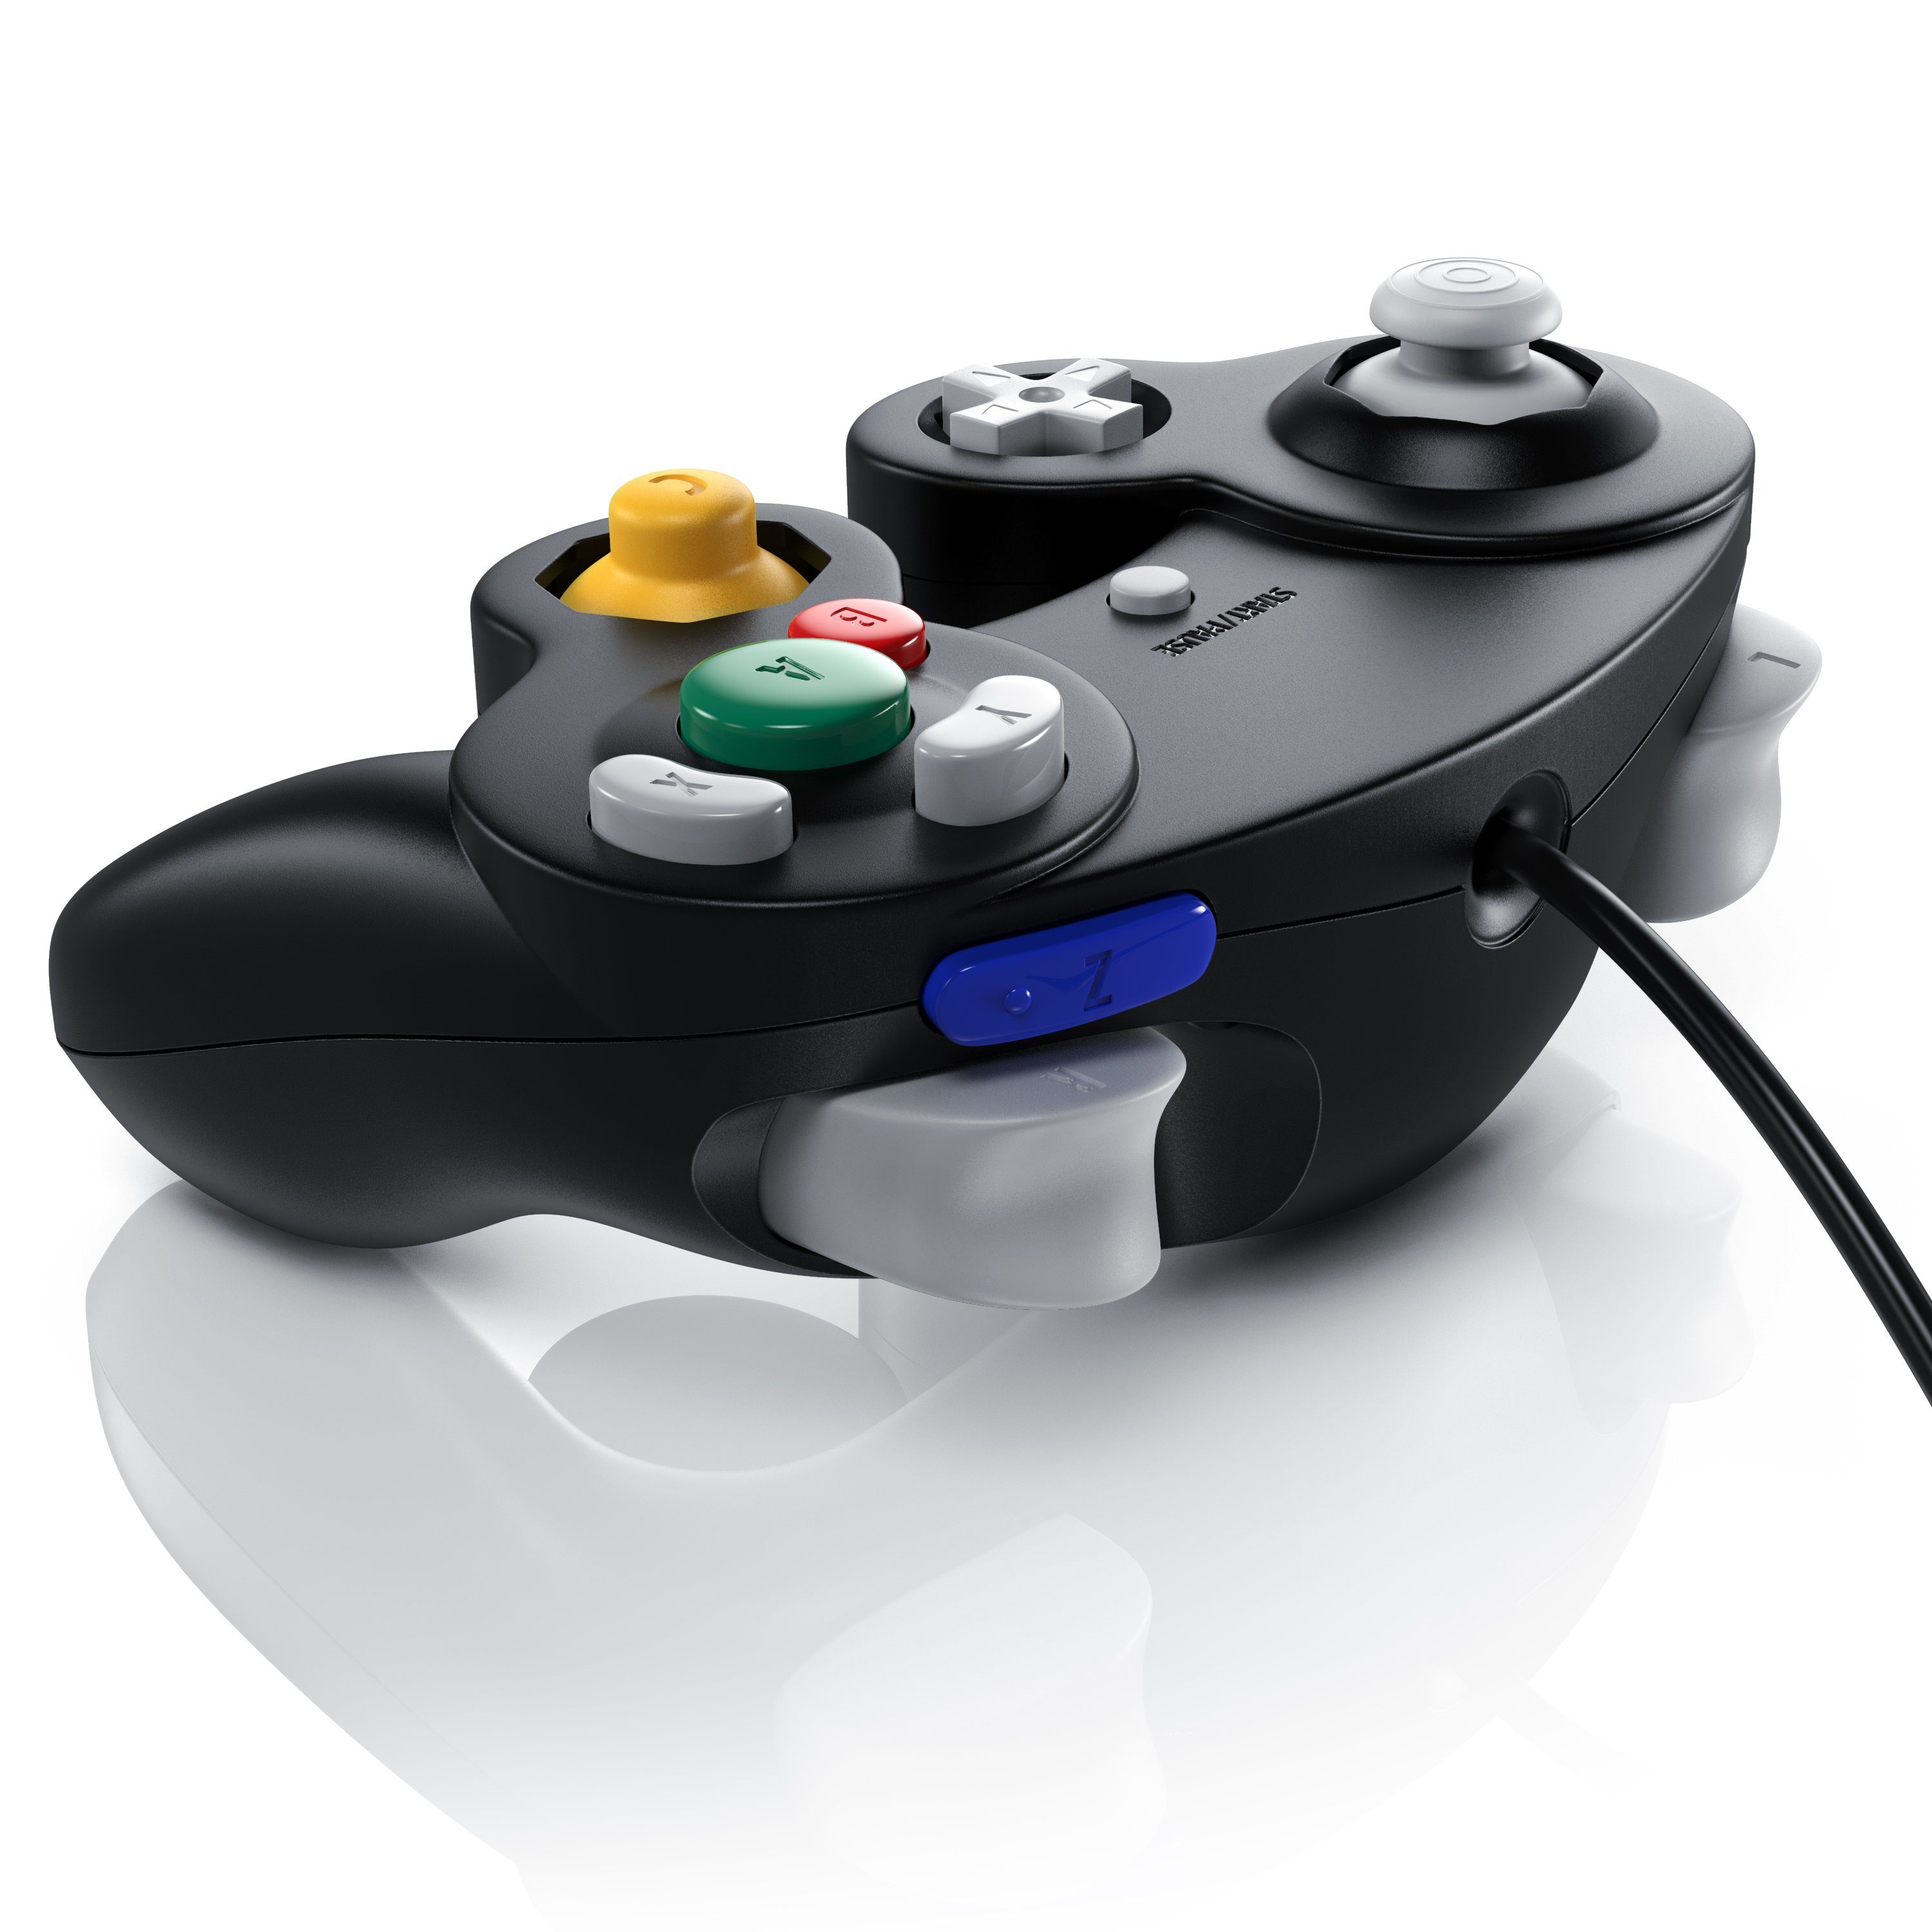 CSL Nintendo-Controller (1 St., Gamepad GameCube Wii / / Vibrationseffekte für ergonomisch) Nintendo